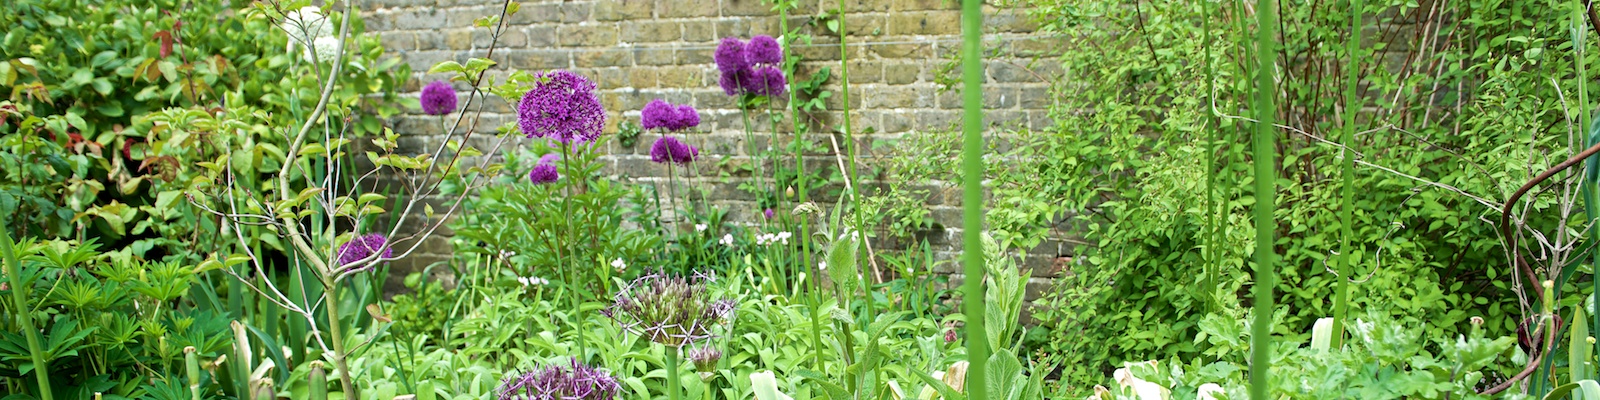 Posy Gentles Gardening Blog